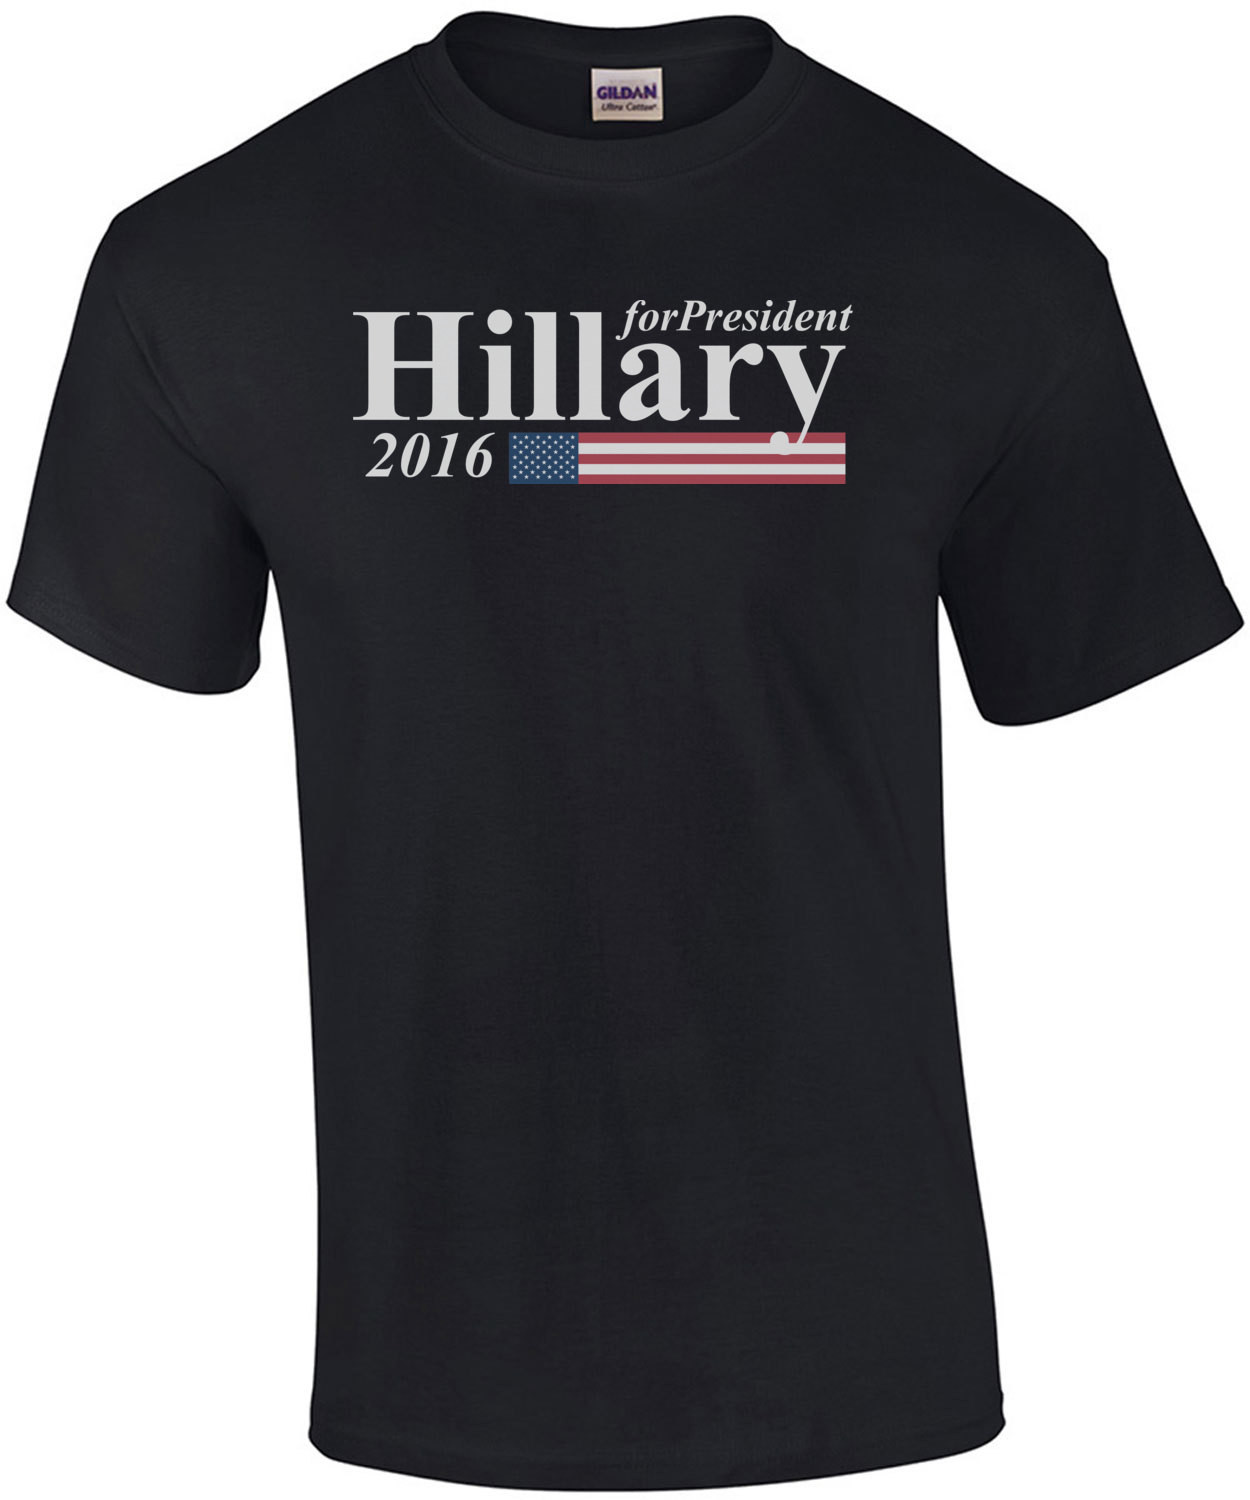 Hillary for President 2016 - Hillary Clinton T-Shirt